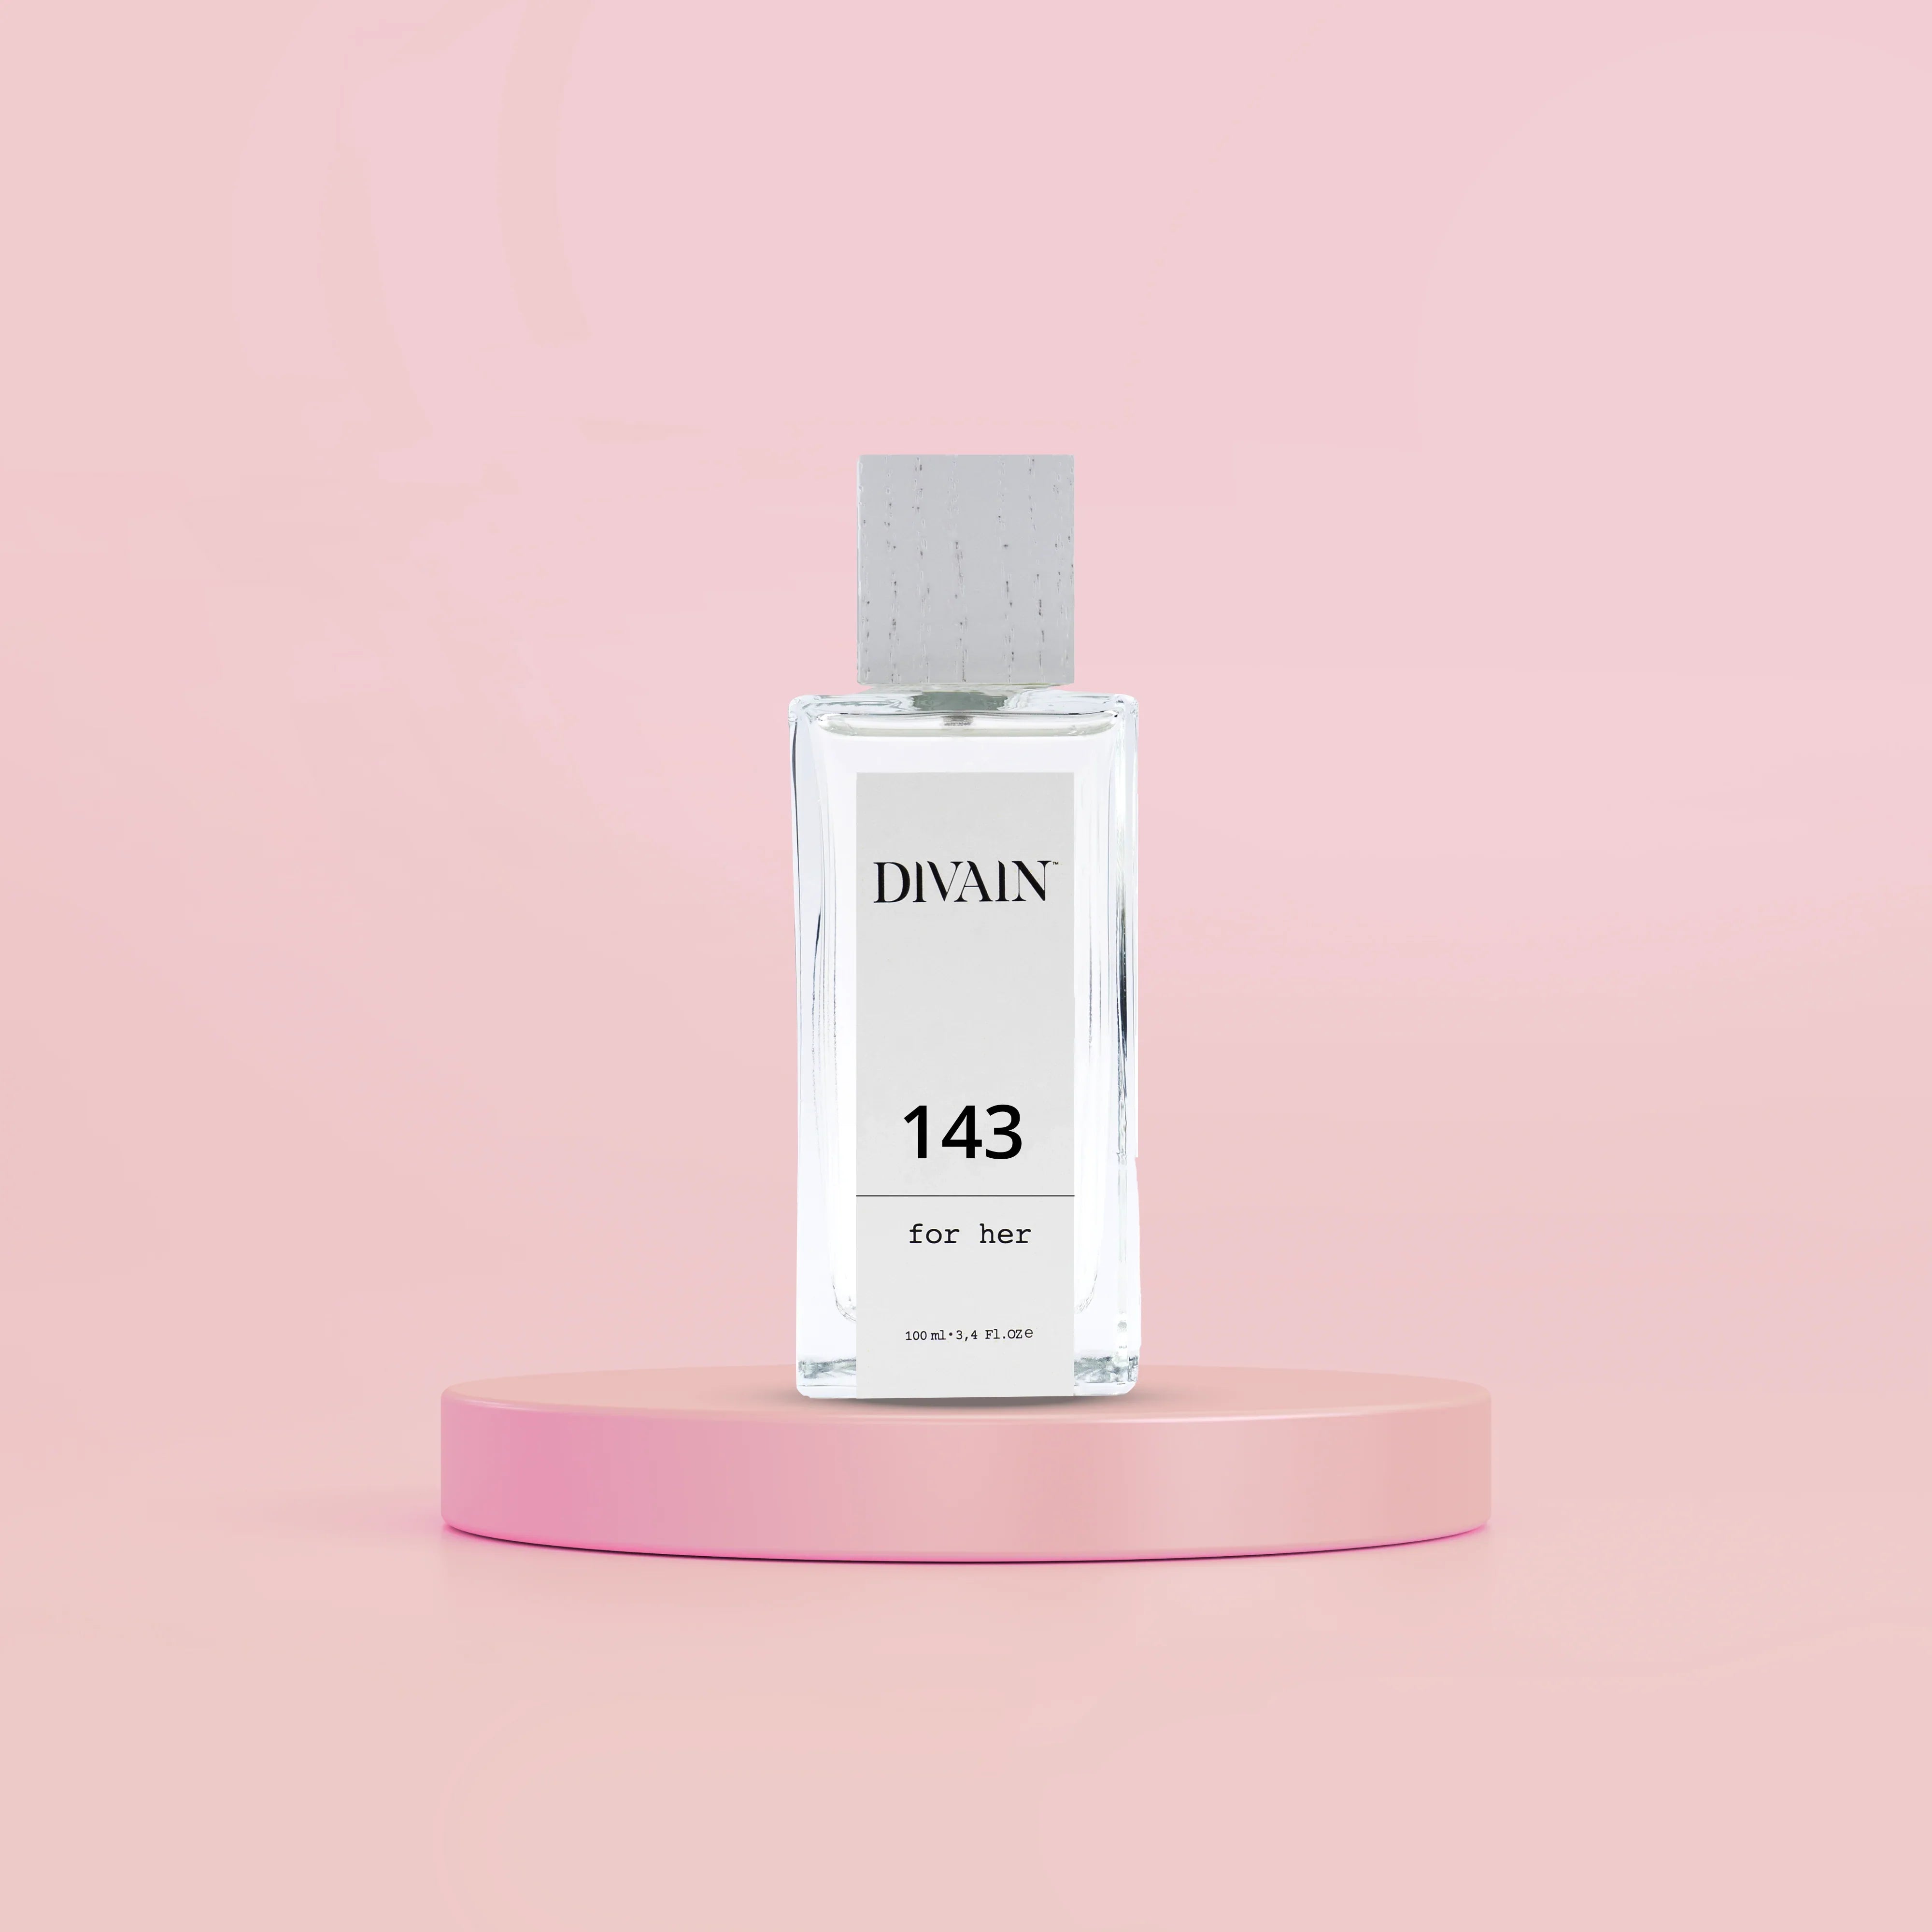 DIVAIN-143 | Similar a Pure Poison de Dior | Mujer